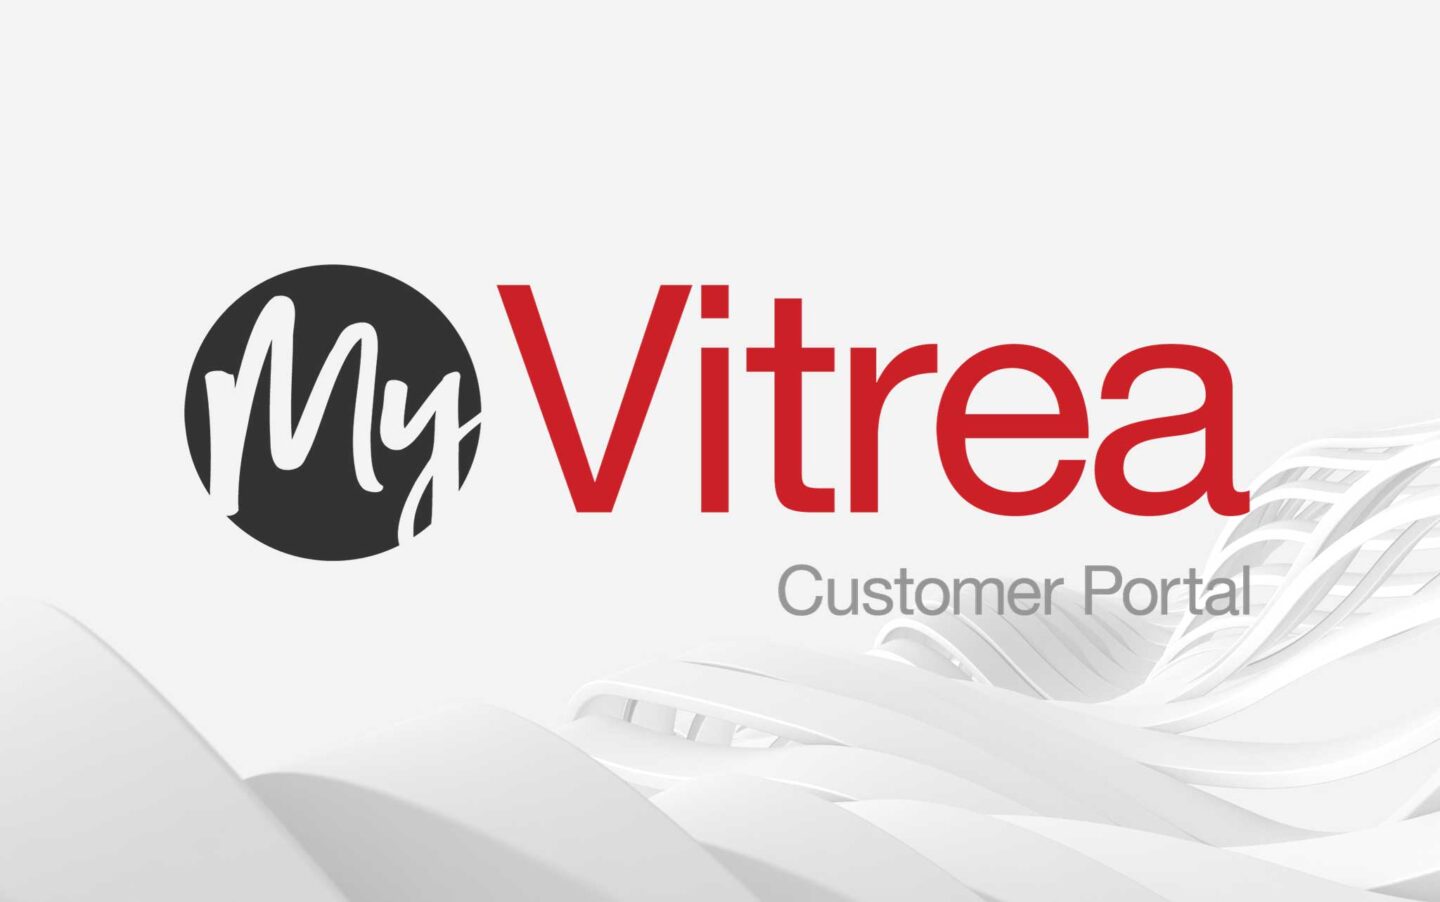 MyVitrea logo with graphic background.